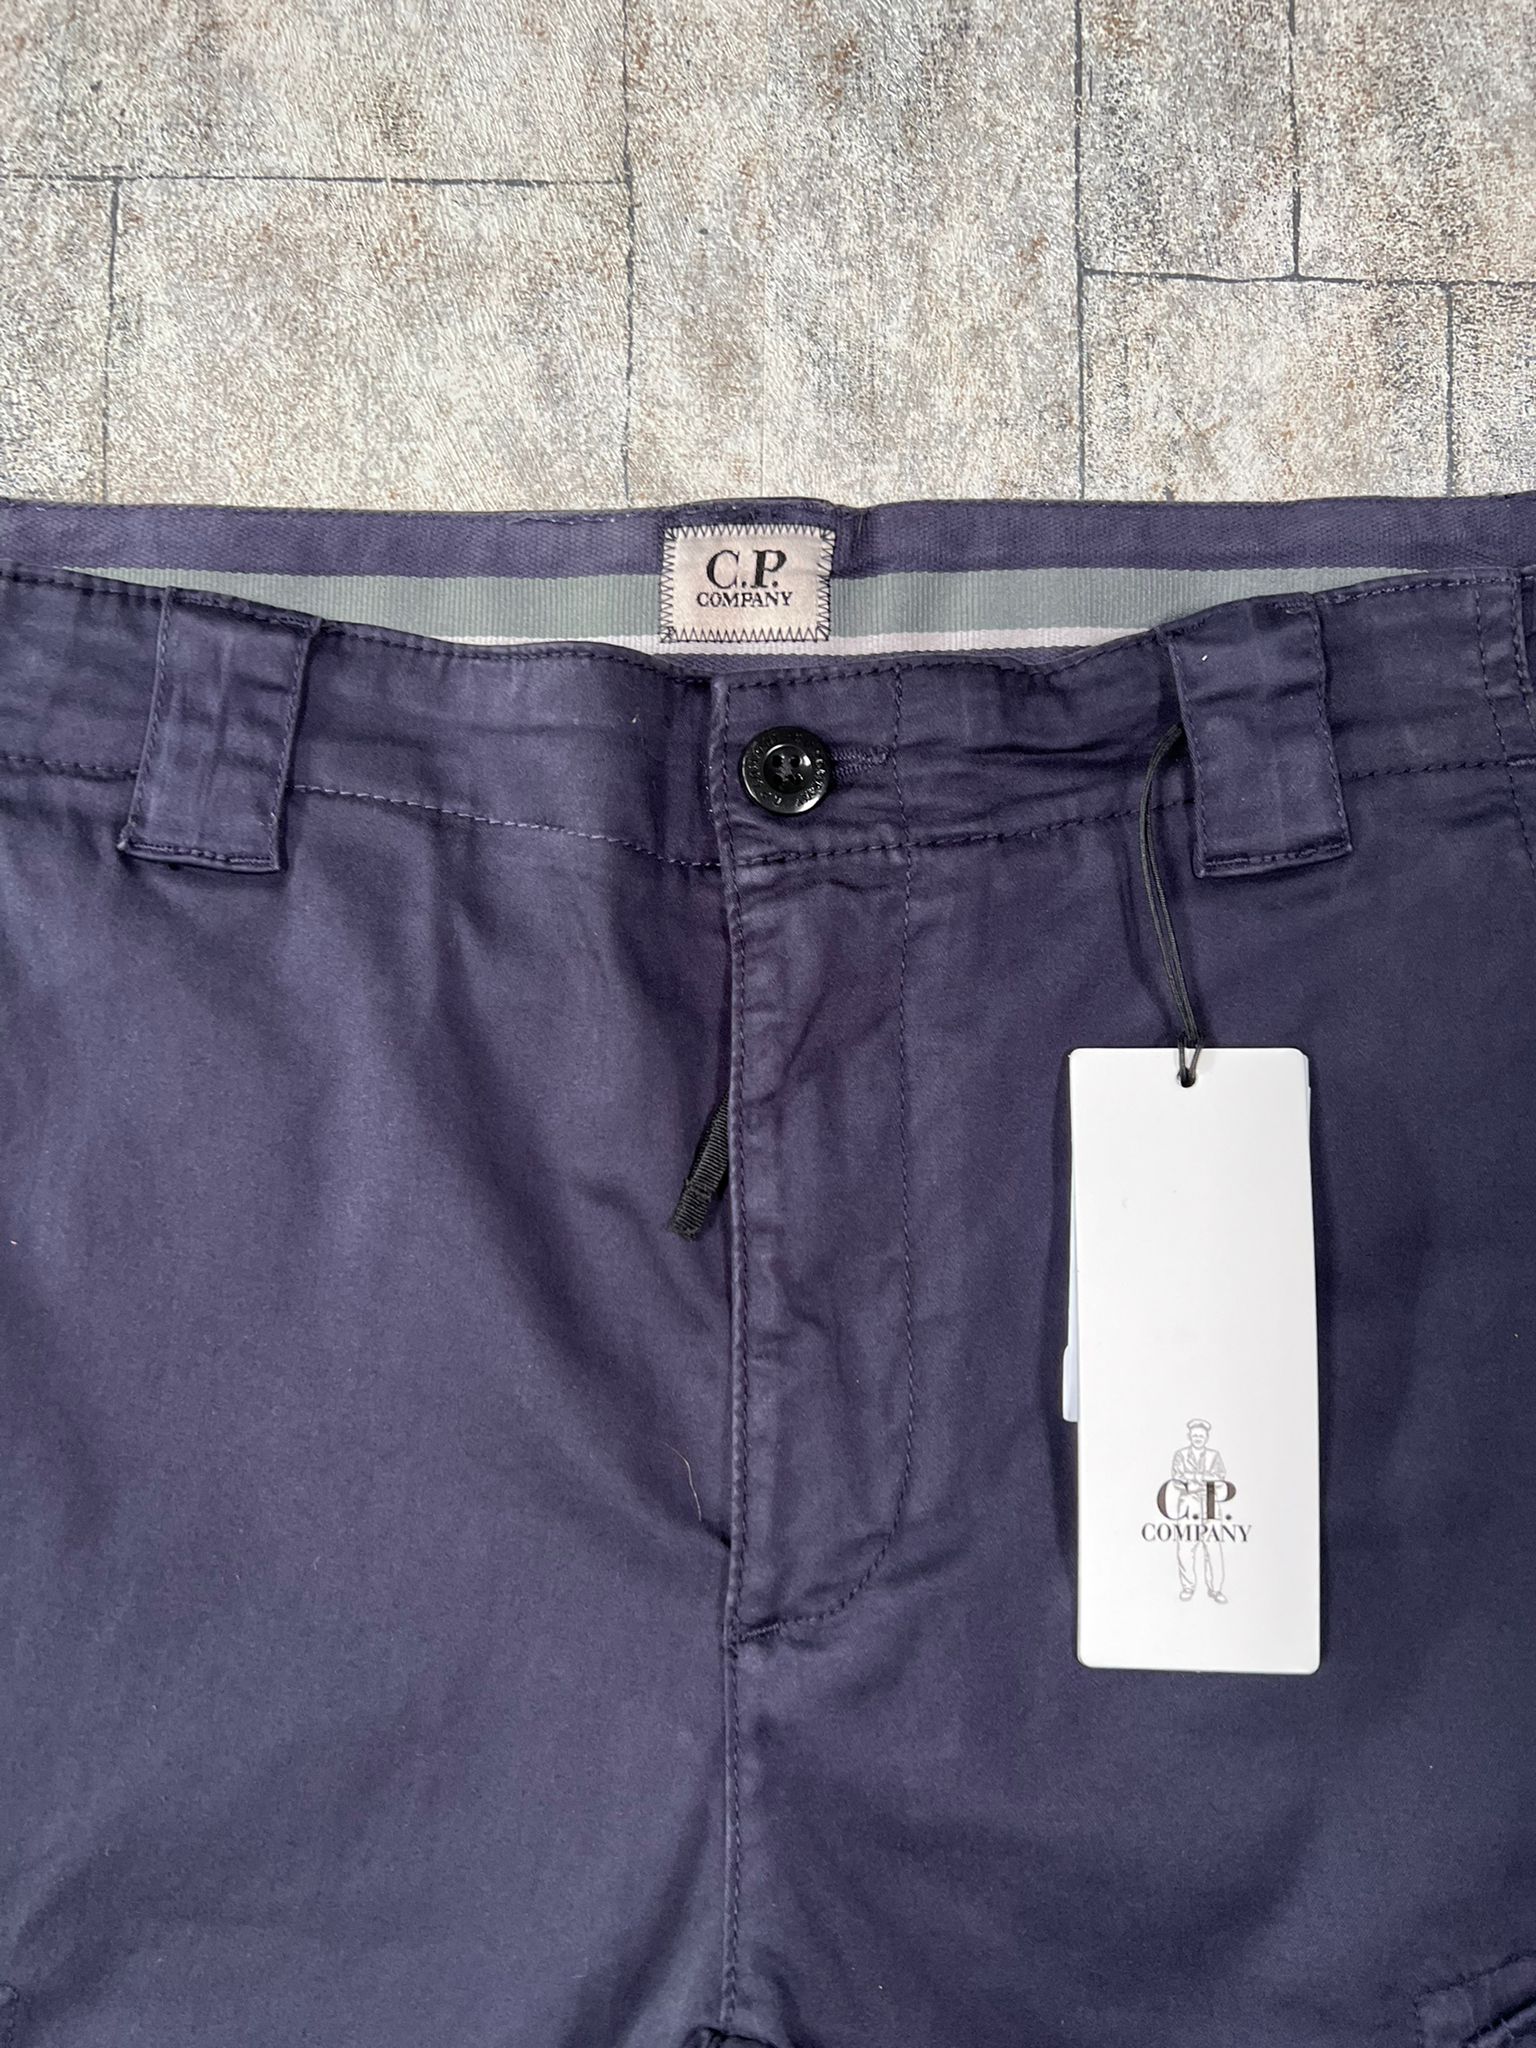 C.P. COMPANY CARGO LENS SHORTS - X Clothing